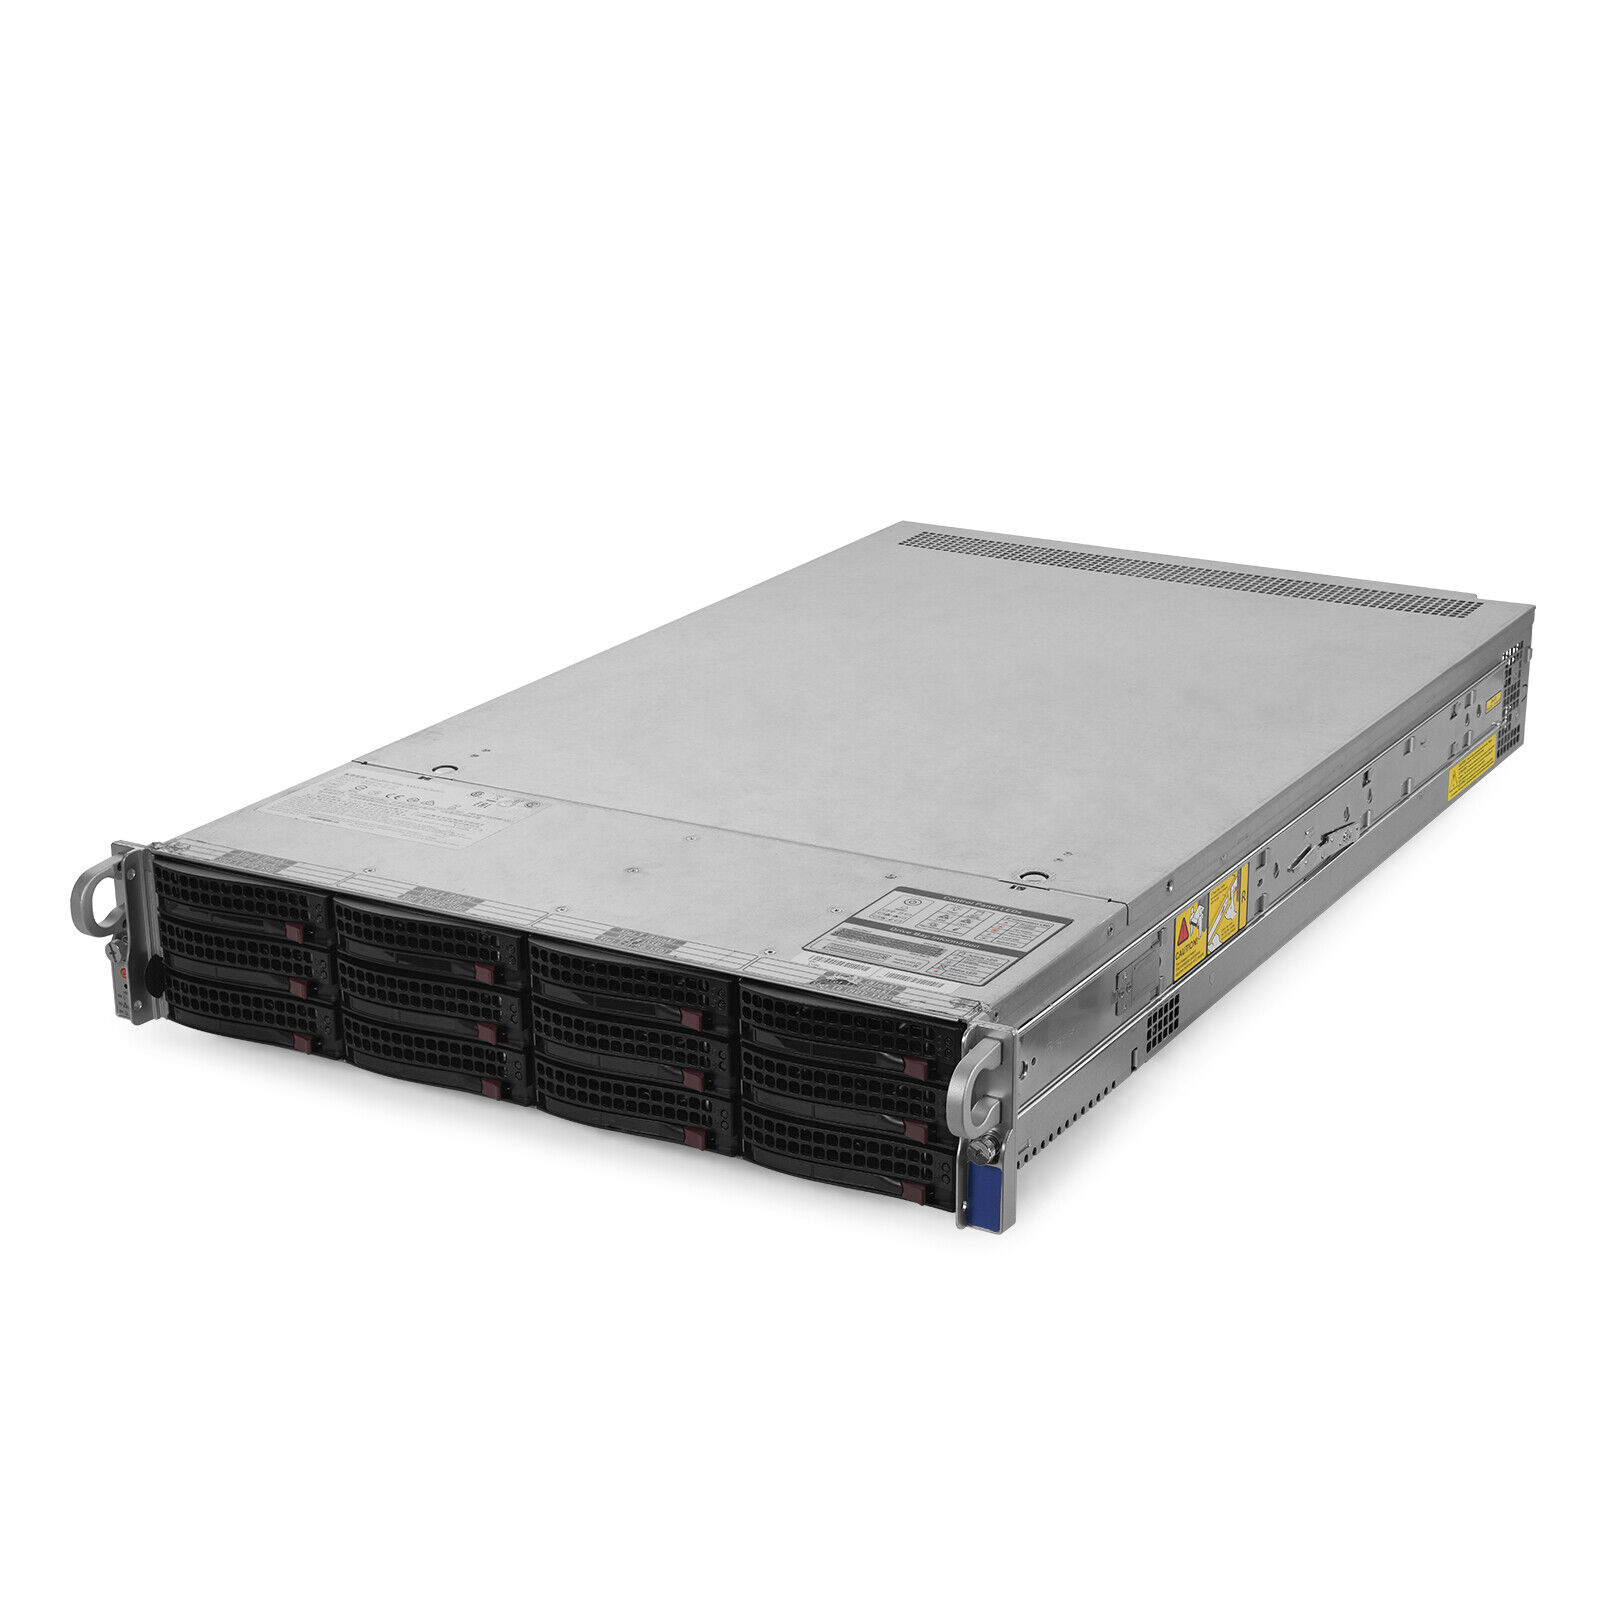 SuperMicro CSE-829U Server 2x Gold 6126 2.60Ghz 24-Core 96GB AOC-S3008L-L8e